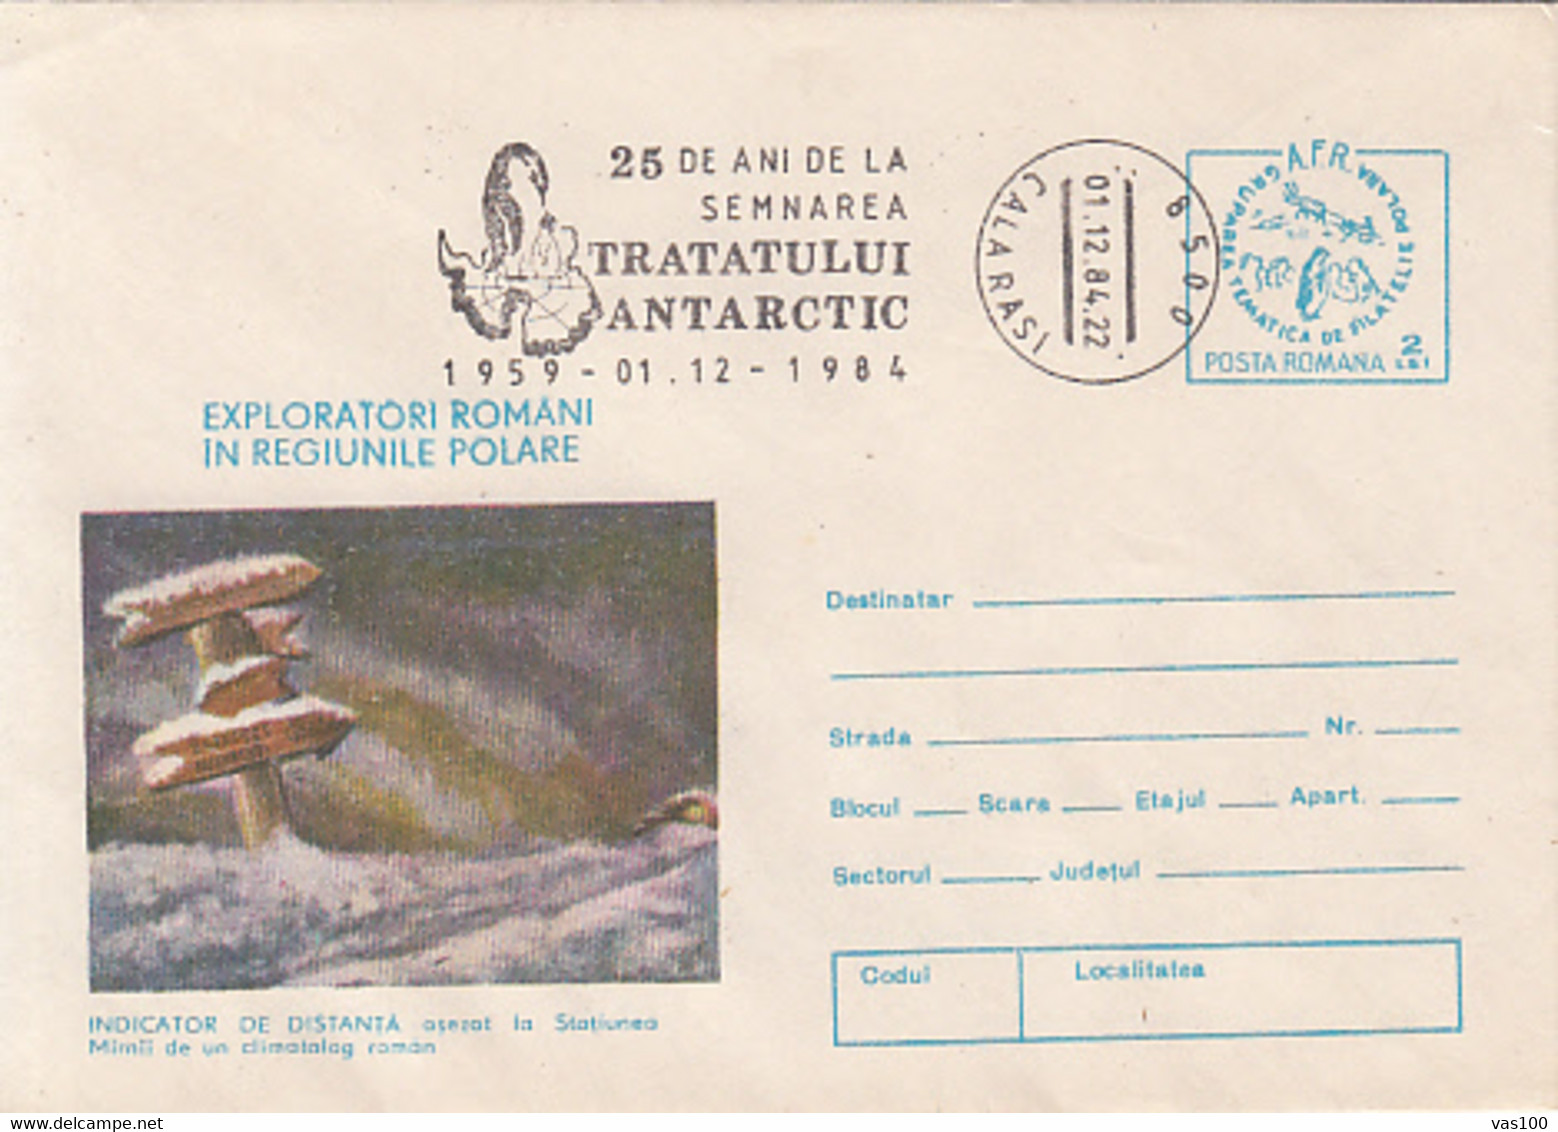 SOUTH POLE, ANTARCTIC TREATY SPECIAL POSTMARK, ANTARCTIC LANDSCAPE, COVER STATIONERY, ENTIER POSTAL, 1984, ROMANIA - Antarktisvertrag